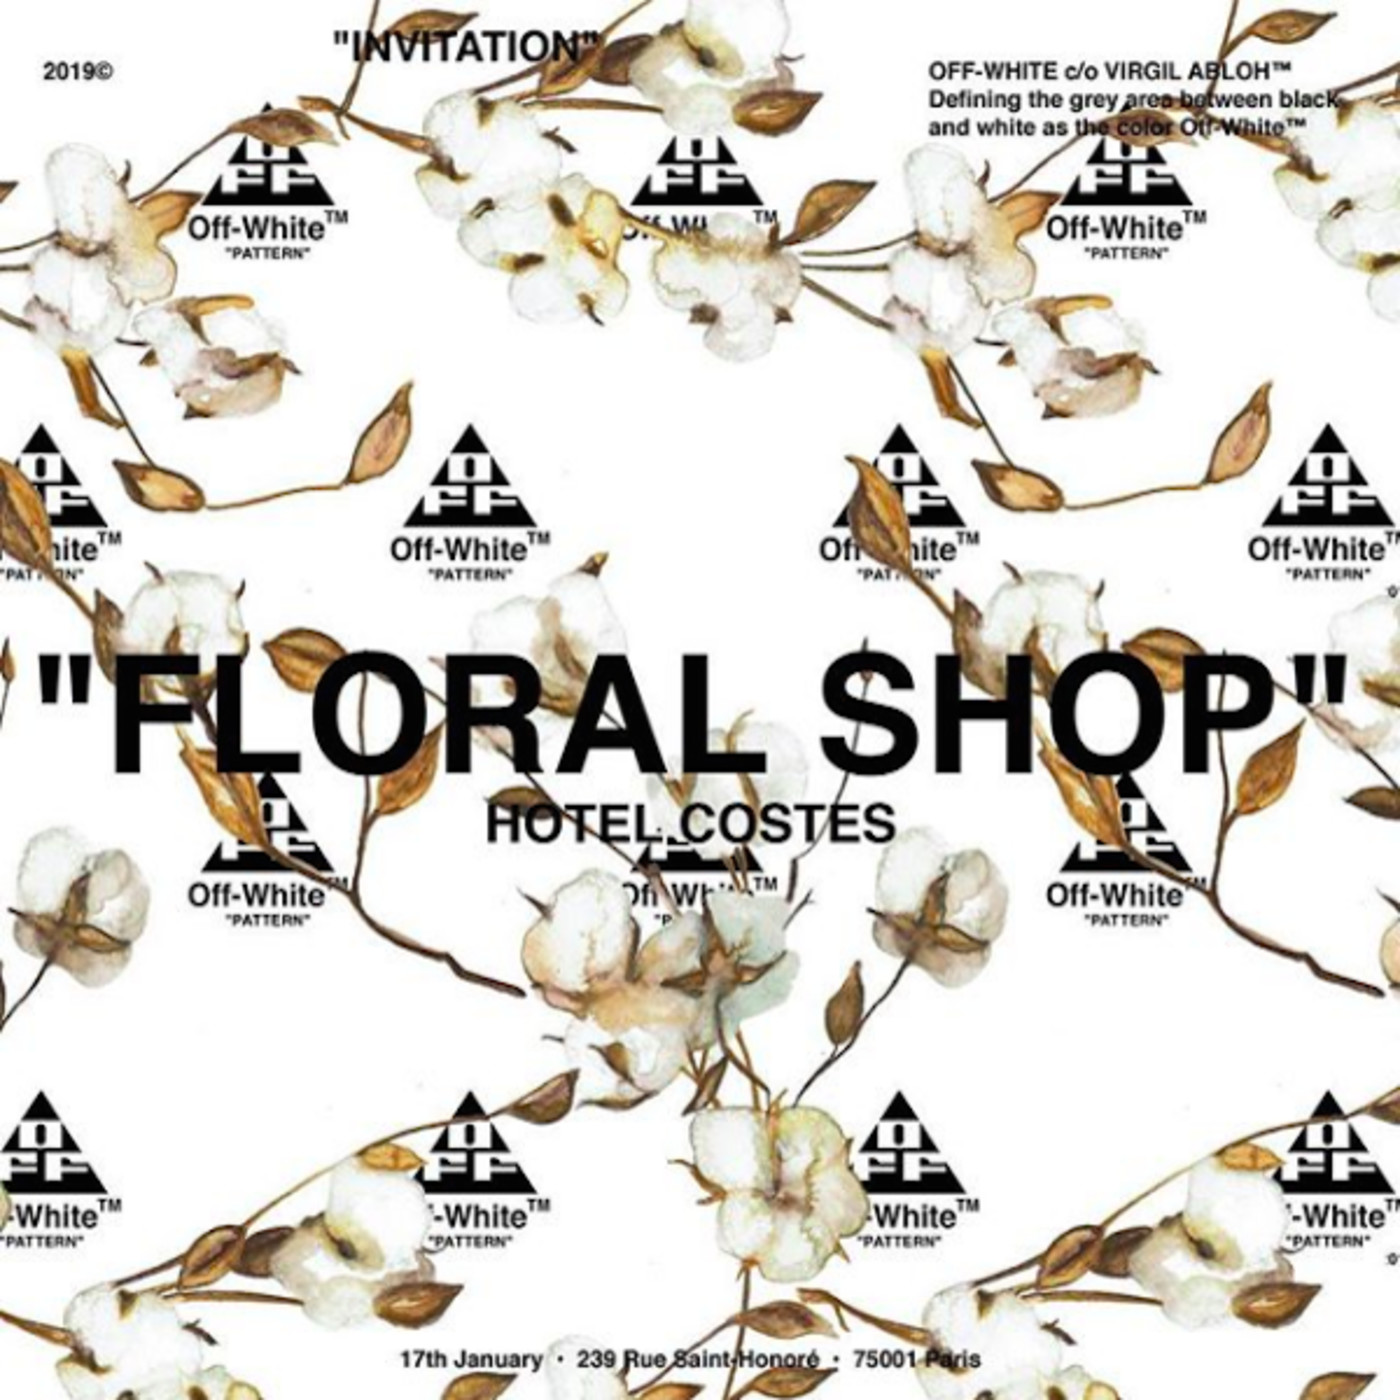 Nybegynder prins Egnet Virgil Abloh Debuts Off-White Sneakers at “Floral Shop” Pop-Up | Complex